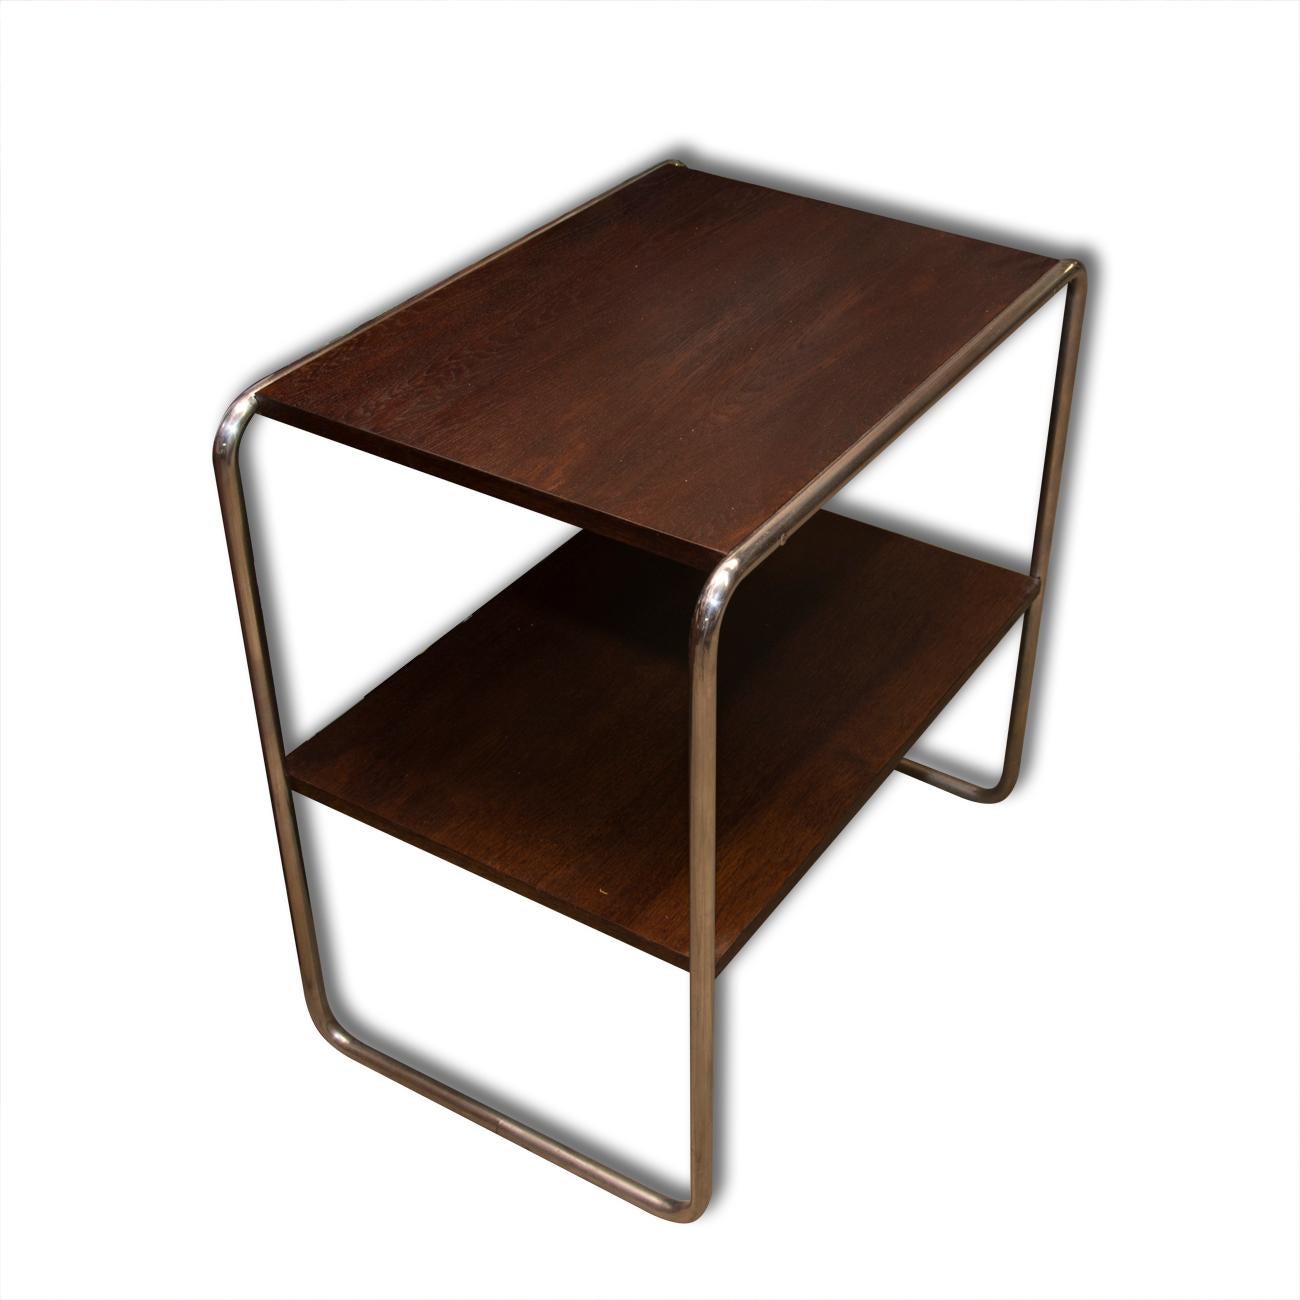 Czech Bauhause Side Table designed by Marcel Breuer, 1930s